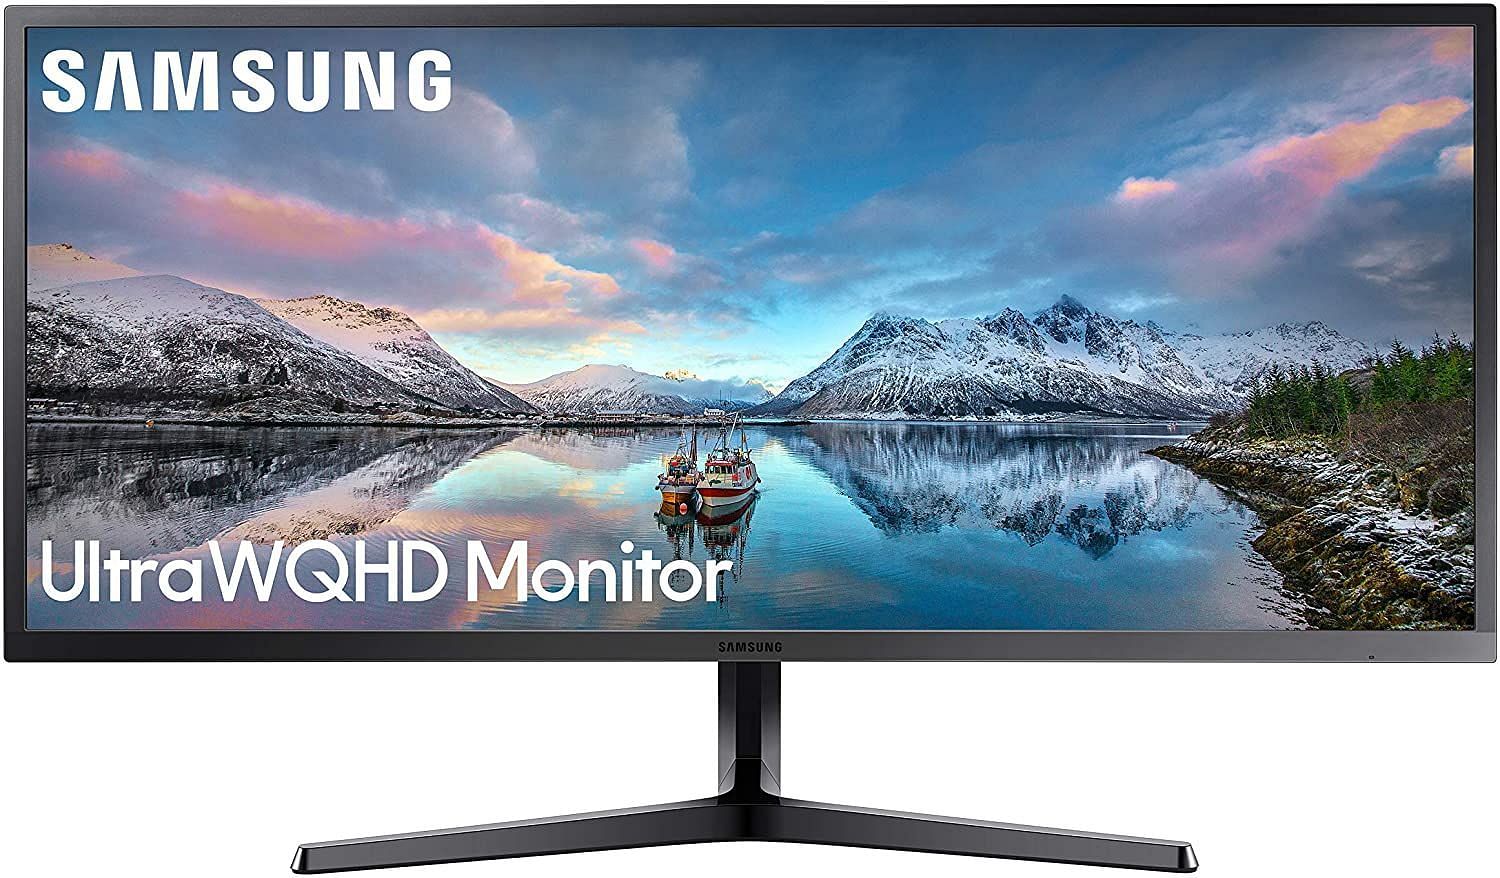 The Samsung monitor (Image via Amazon)